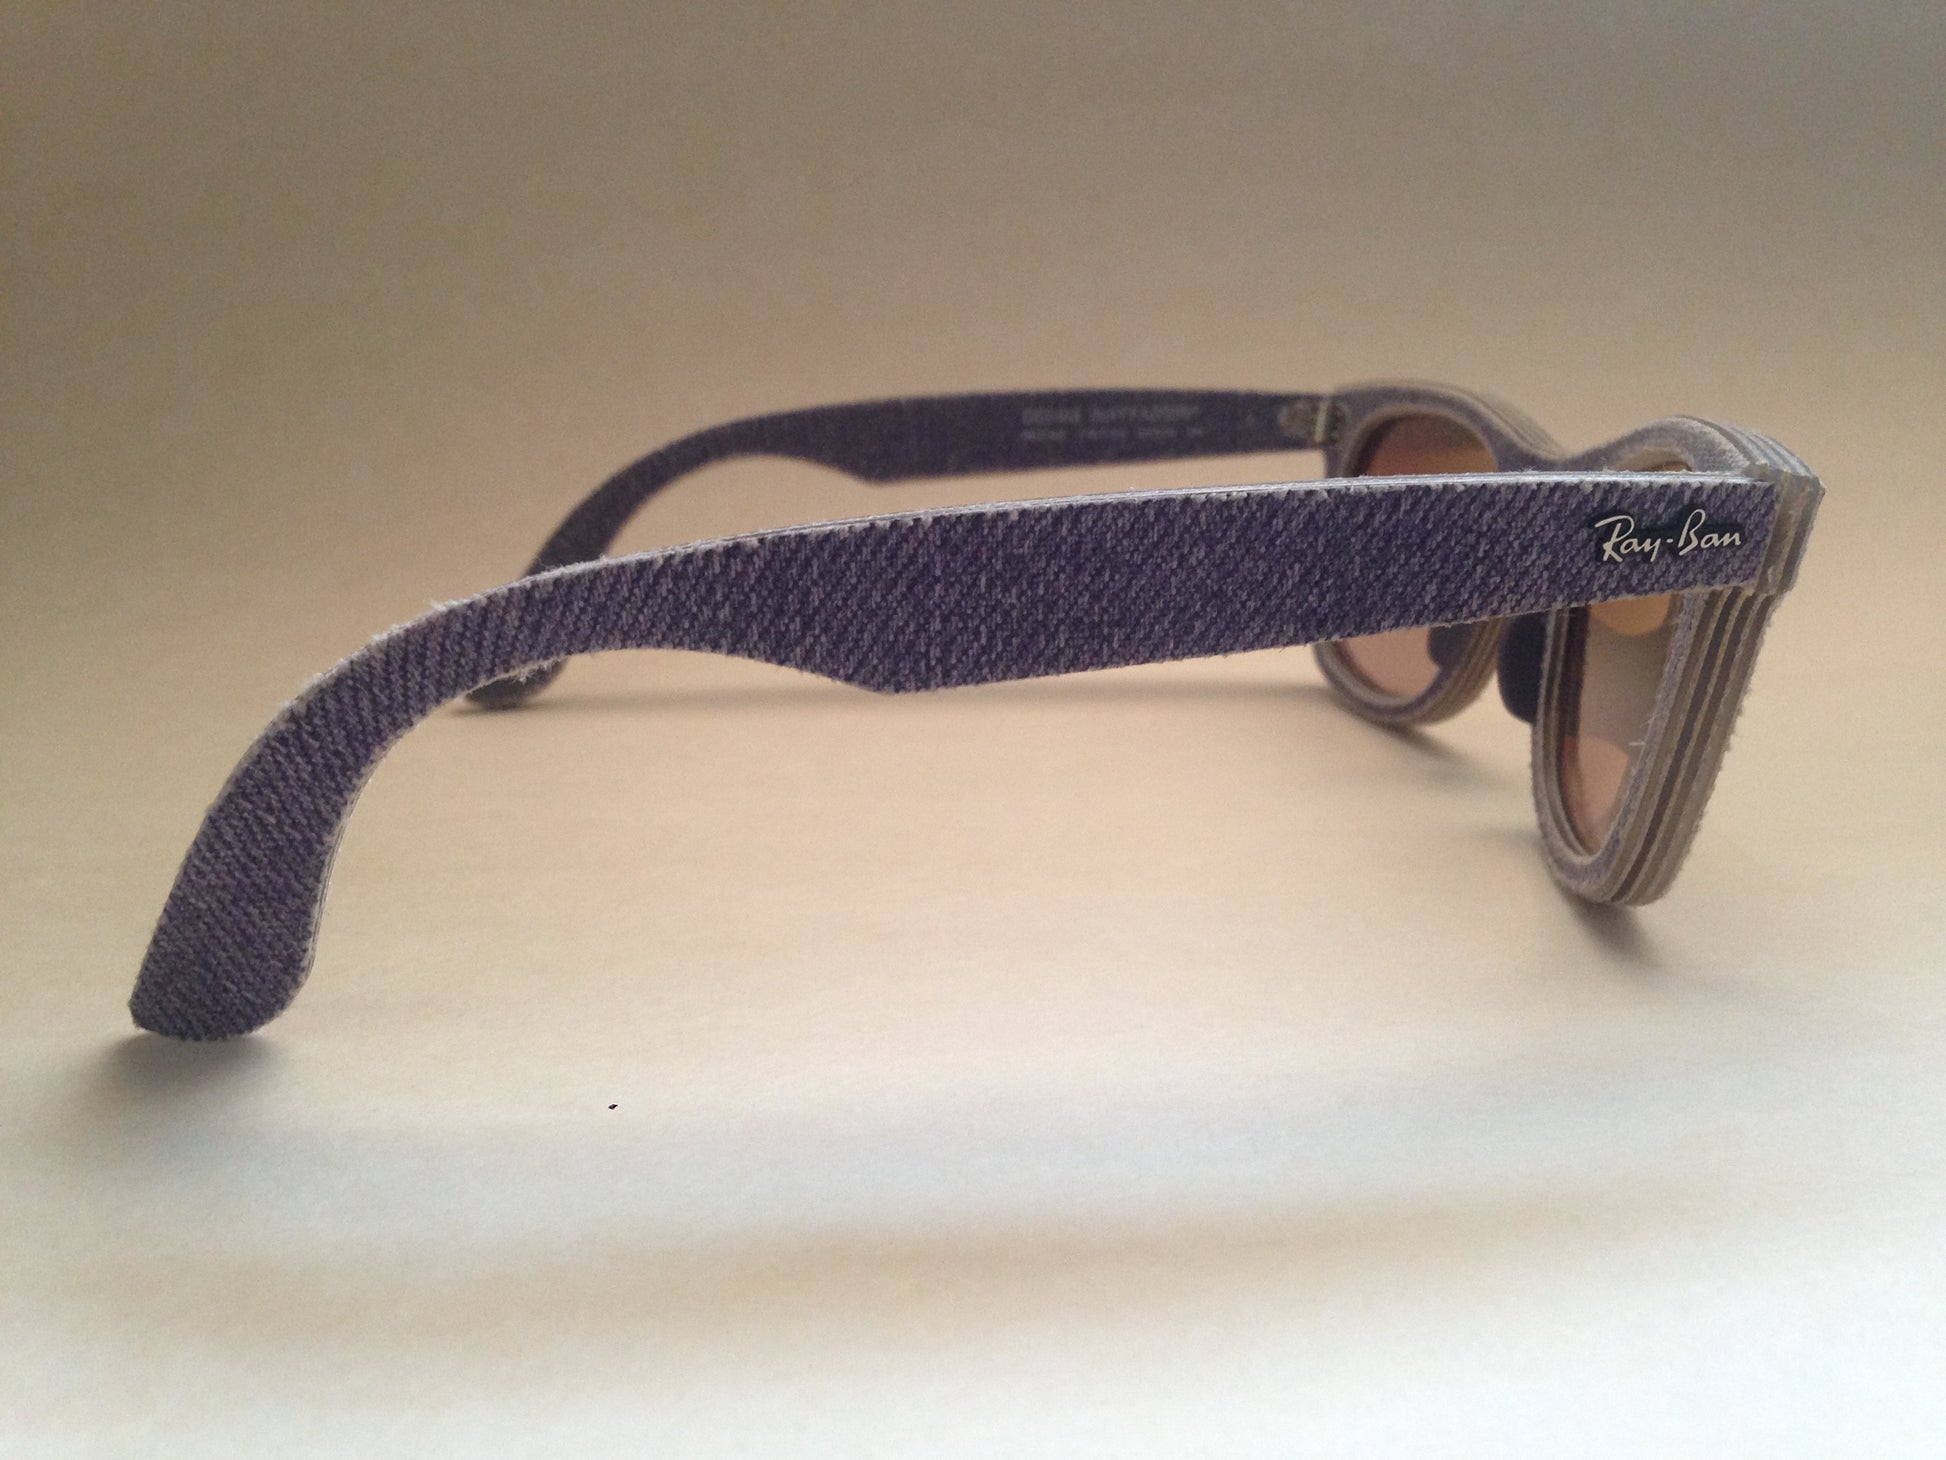 Ray-Ban Denim Wayfarer Sunglasses Violet Jean Denim Frame Light Violet Gradient Lens Rb2140 1167S5 - Sunglasses